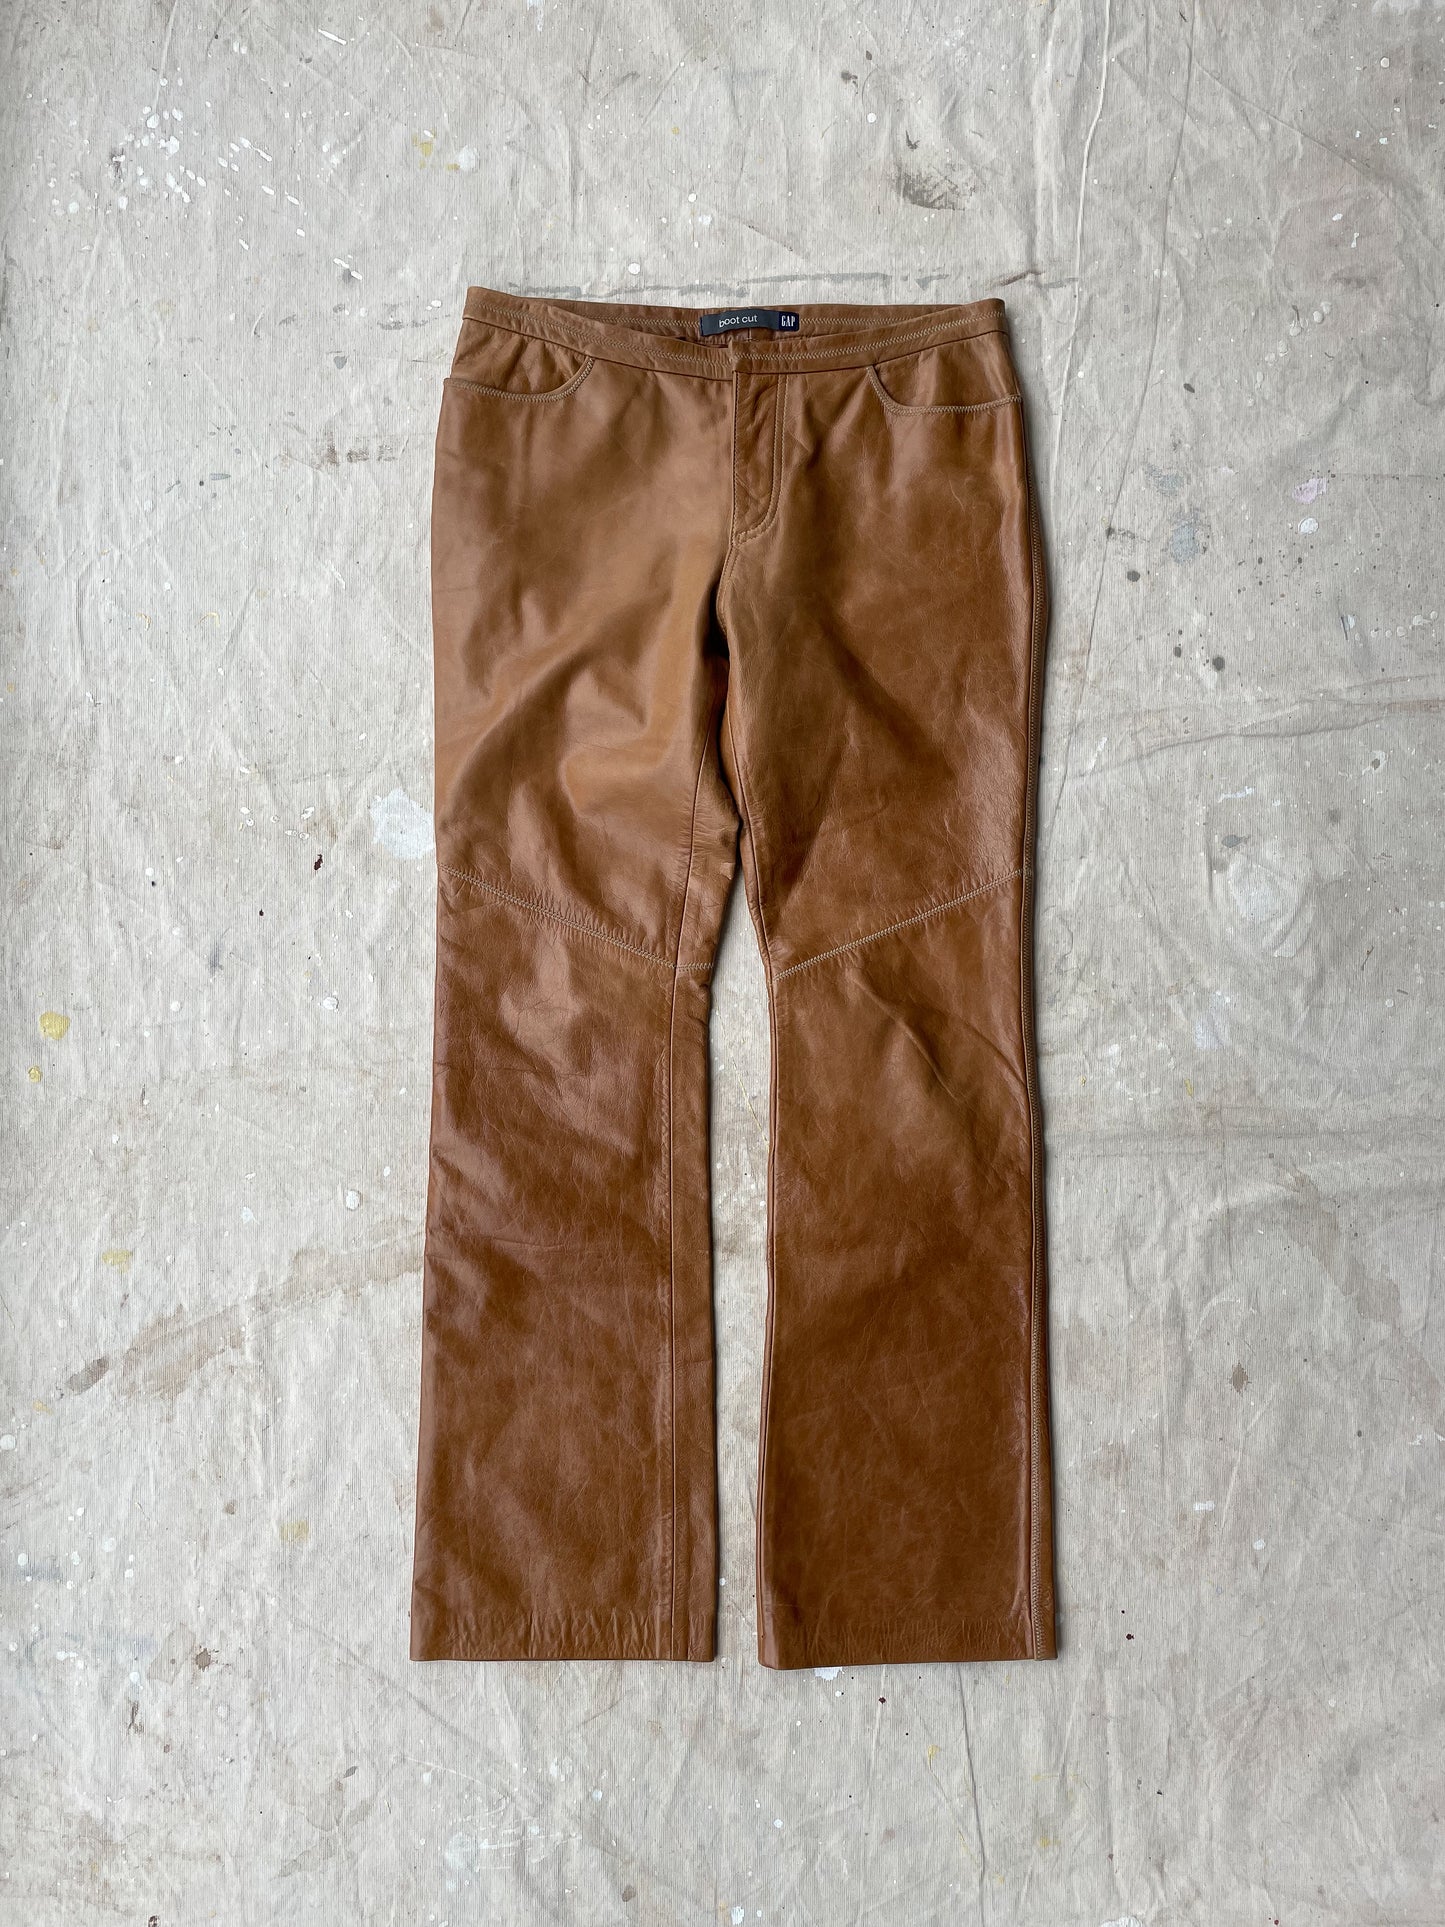 Gap Leather Pants—[32x32]